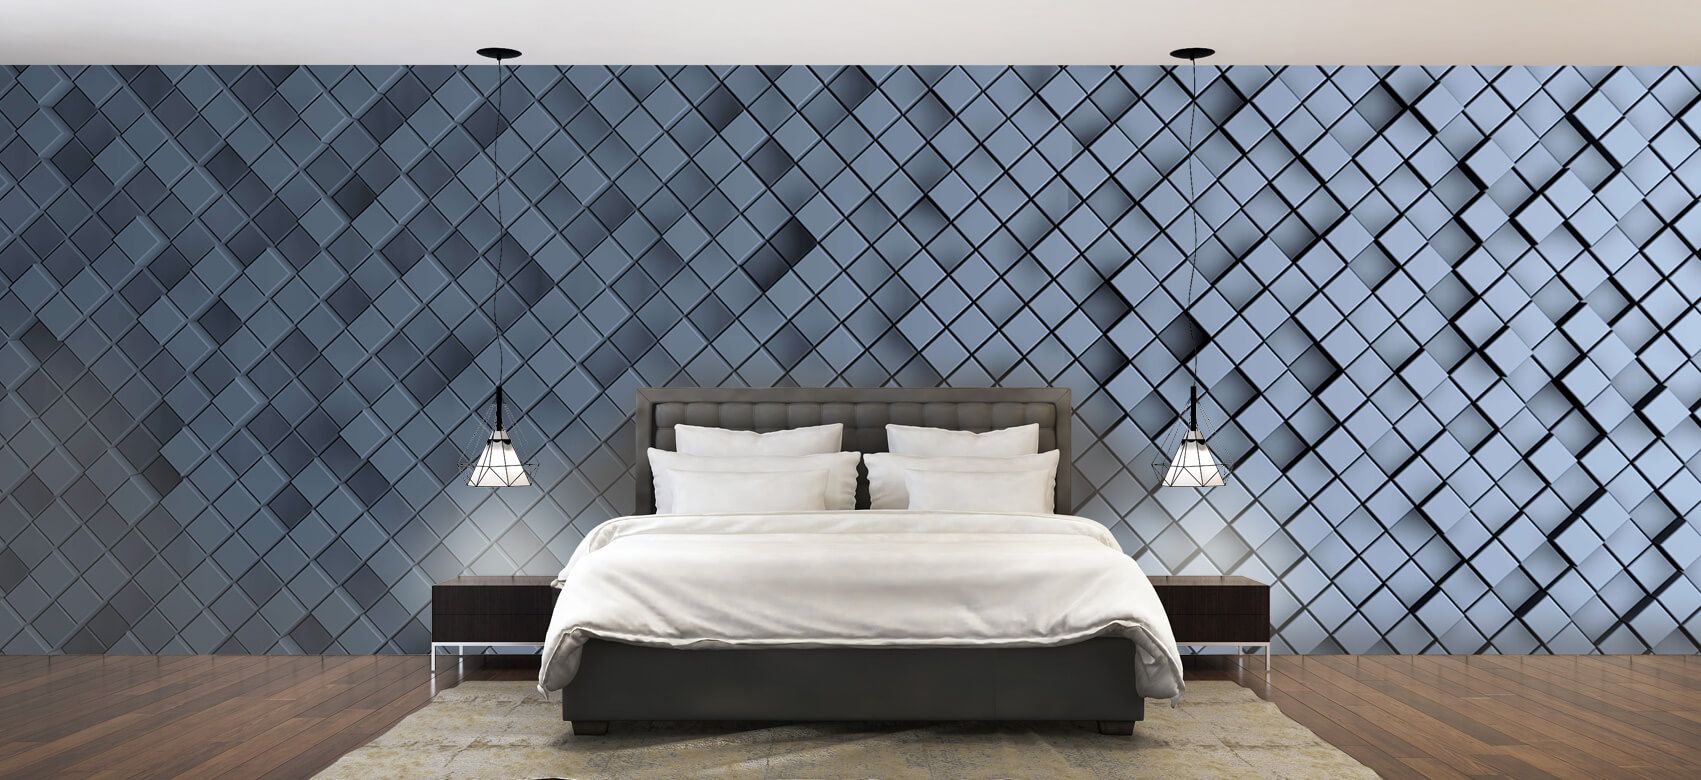 Indian Royals Mosaic Tile Design Vinyl Self Adhesive Home Décor Wallpaper  (200 CM X 45 CM) (Set of 1) : Amazon.in: Home Improvement